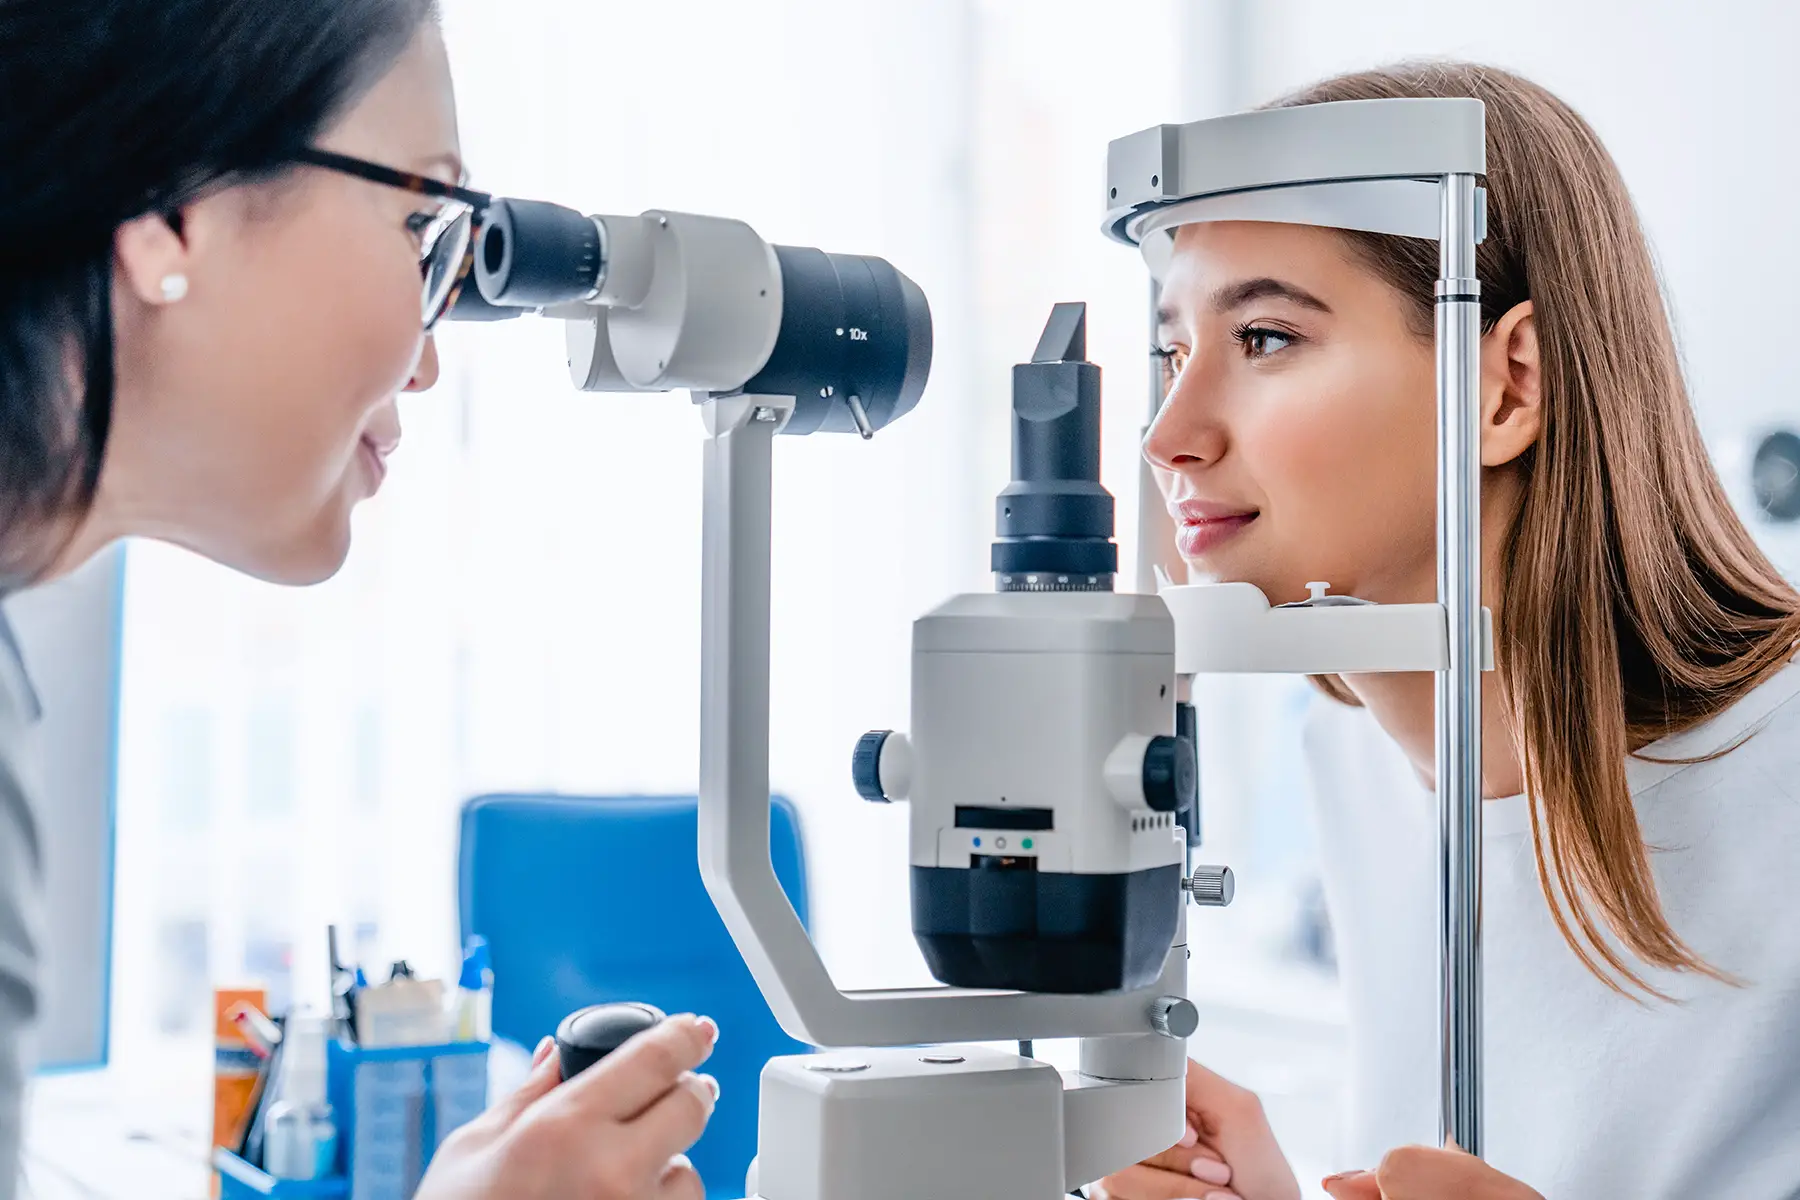 Patient receiving an eye exam